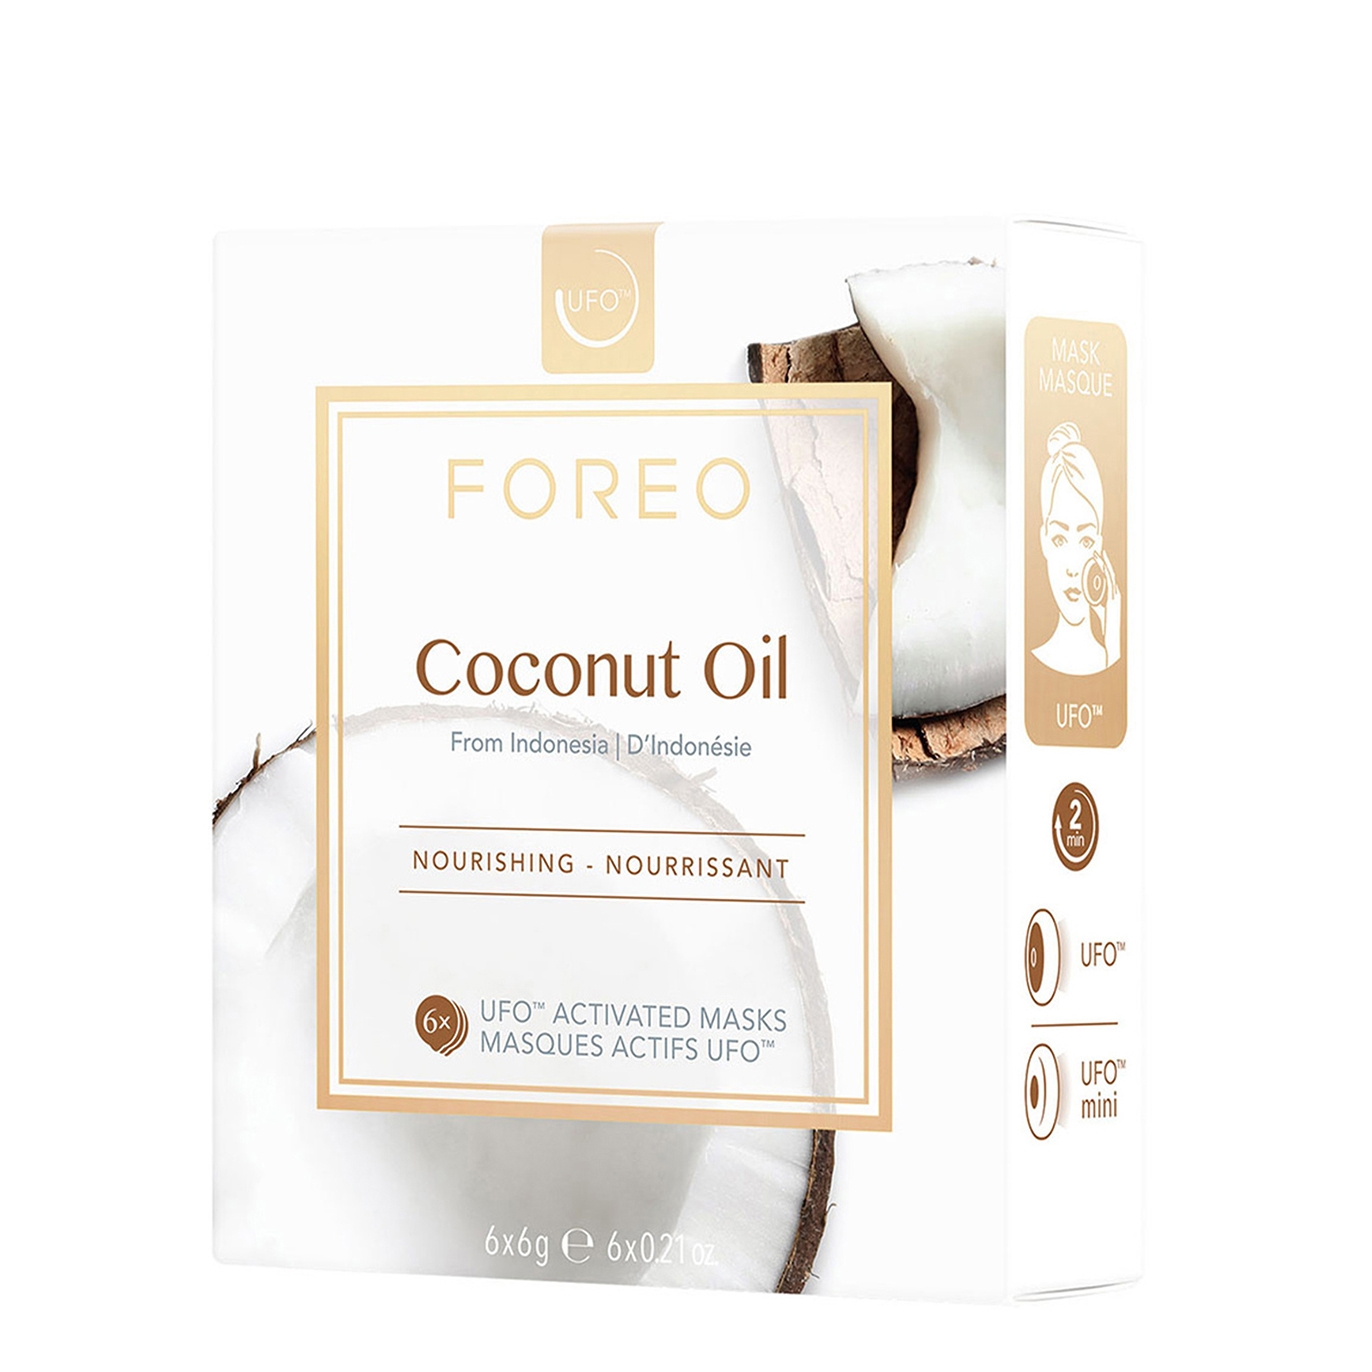 Foreo Coconut Oil Ufo/ufo Mini Nourishing Face Mask For Dry Skin